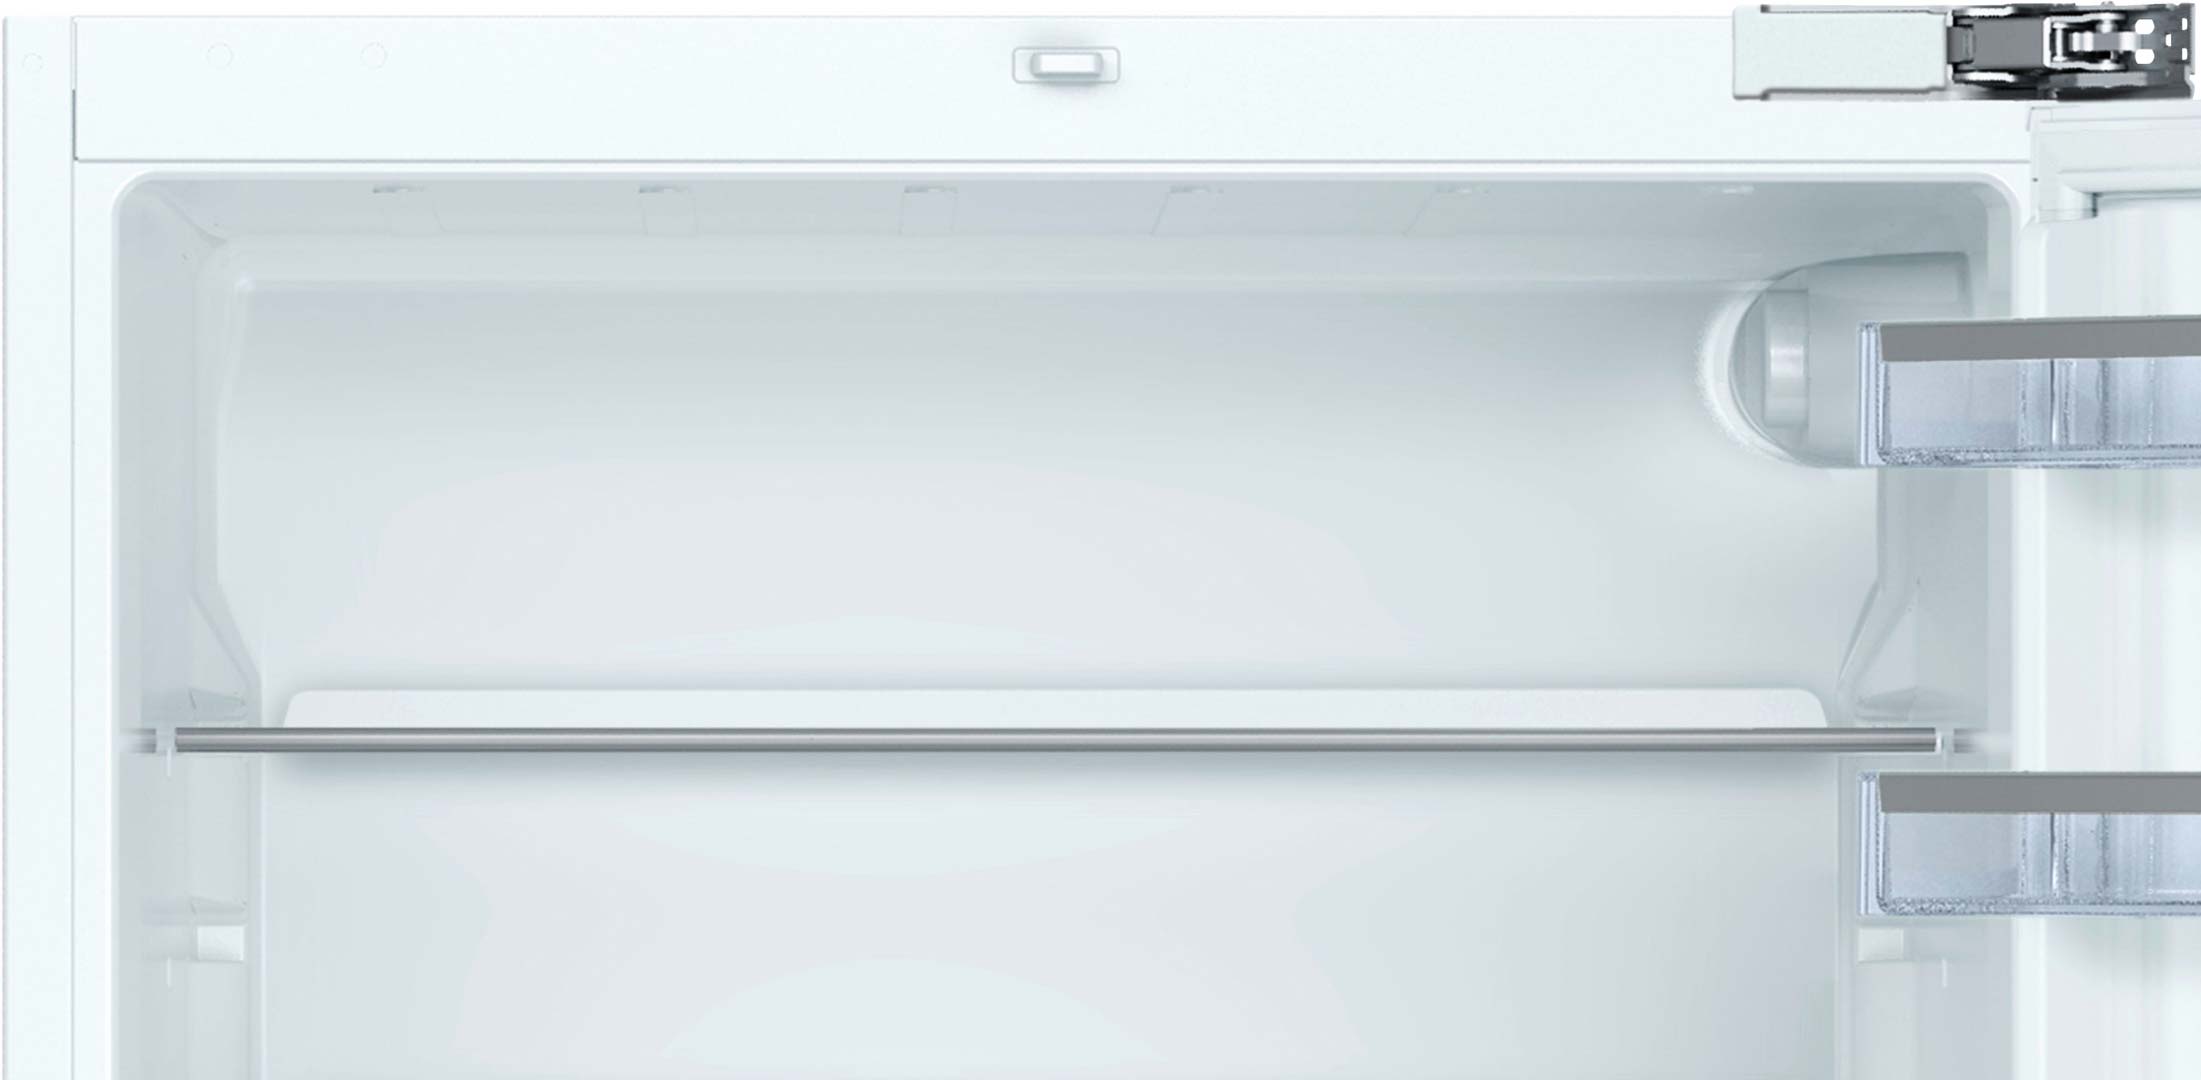 Холодильник Bosch KUR15ADF0U цена 21700.35 грн - фотография 2